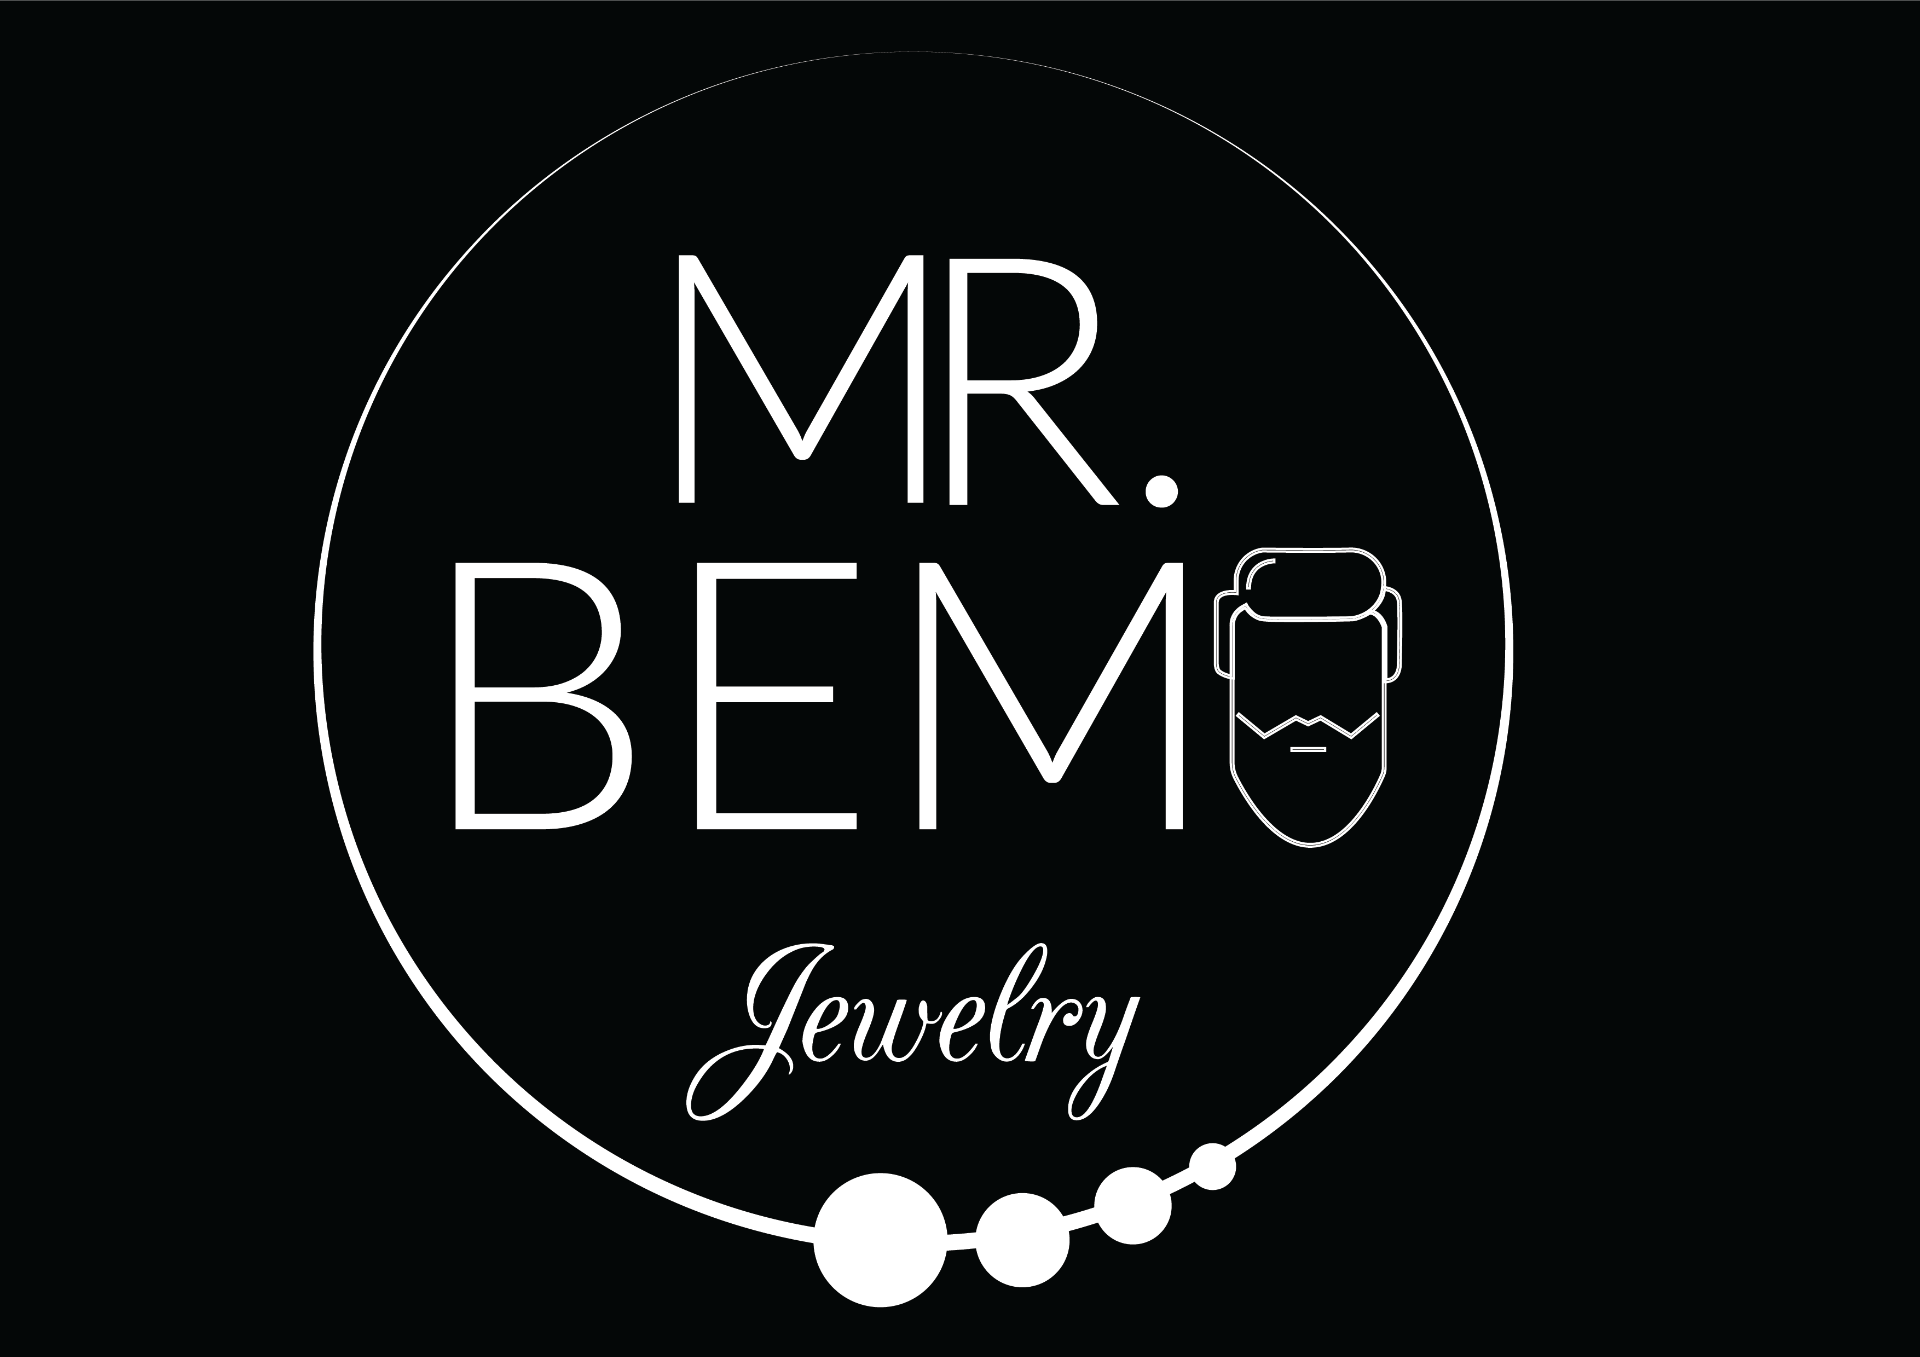 MR. BEMO_JEWERLY